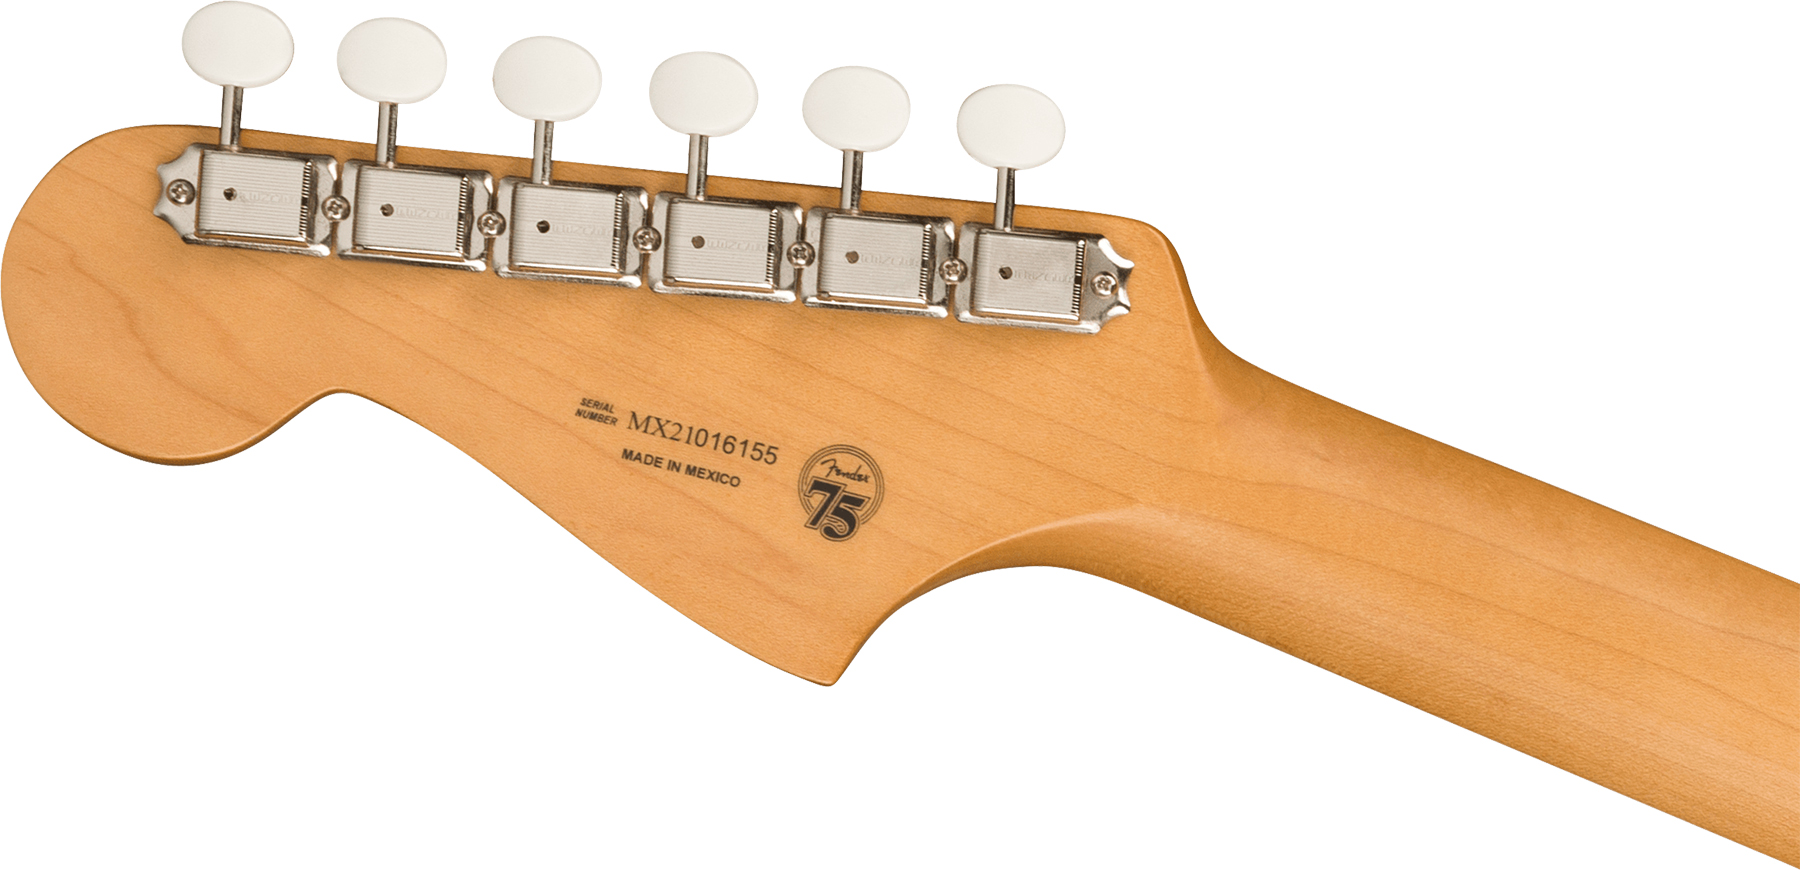 Fender Jazzmaster Gold Foil Ltd Mex 3mh Trem Bigsby Eb - Shoreline Gold - Retro-Rock-E-Gitarre - Variation 3